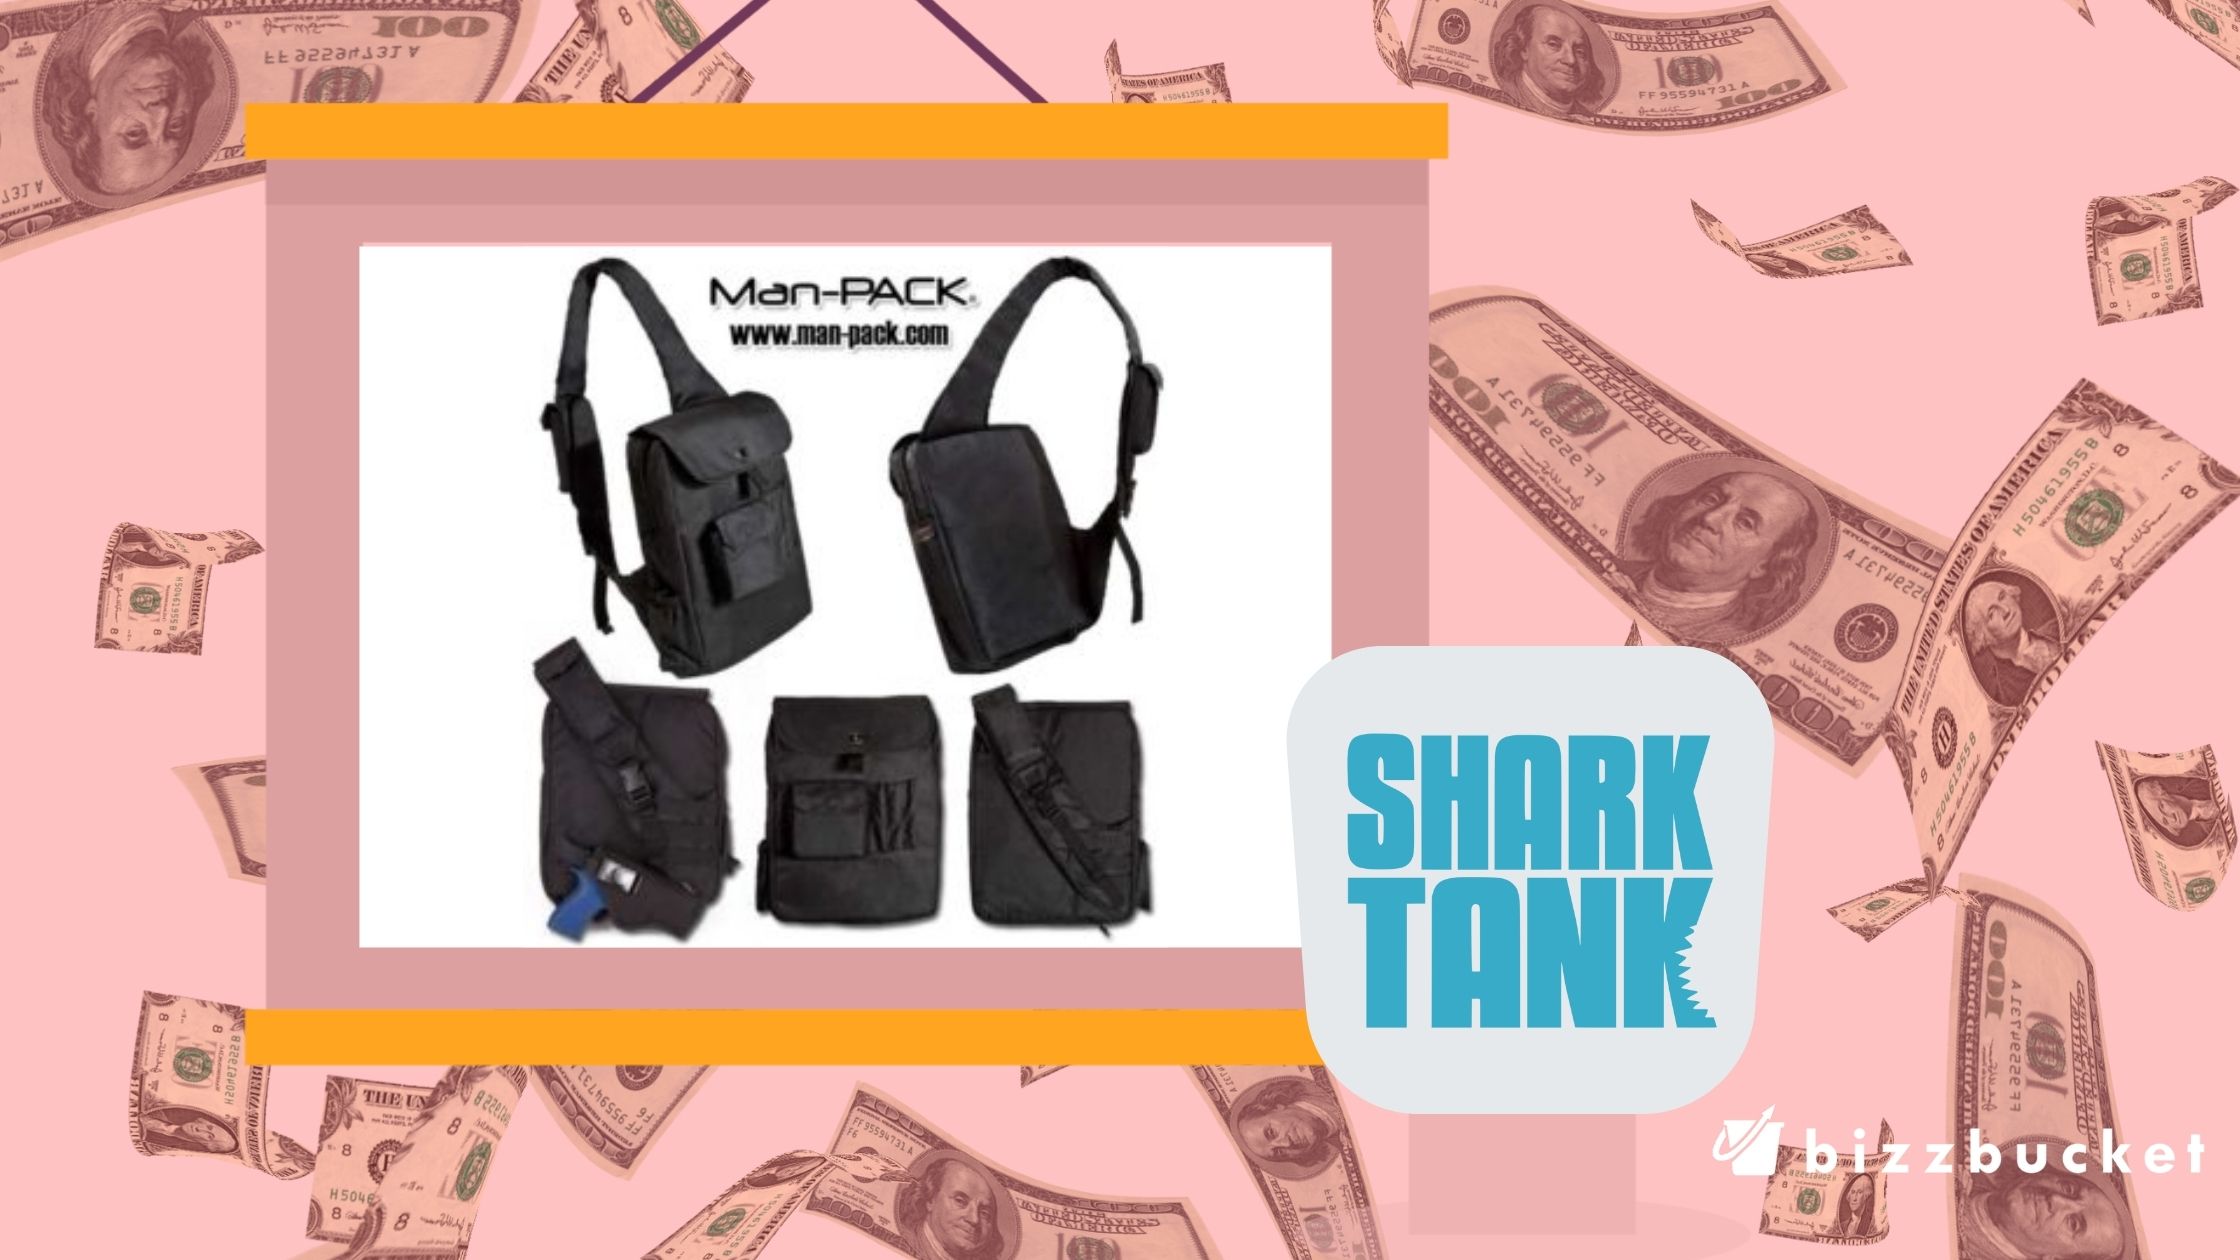 Manpack shark tank update